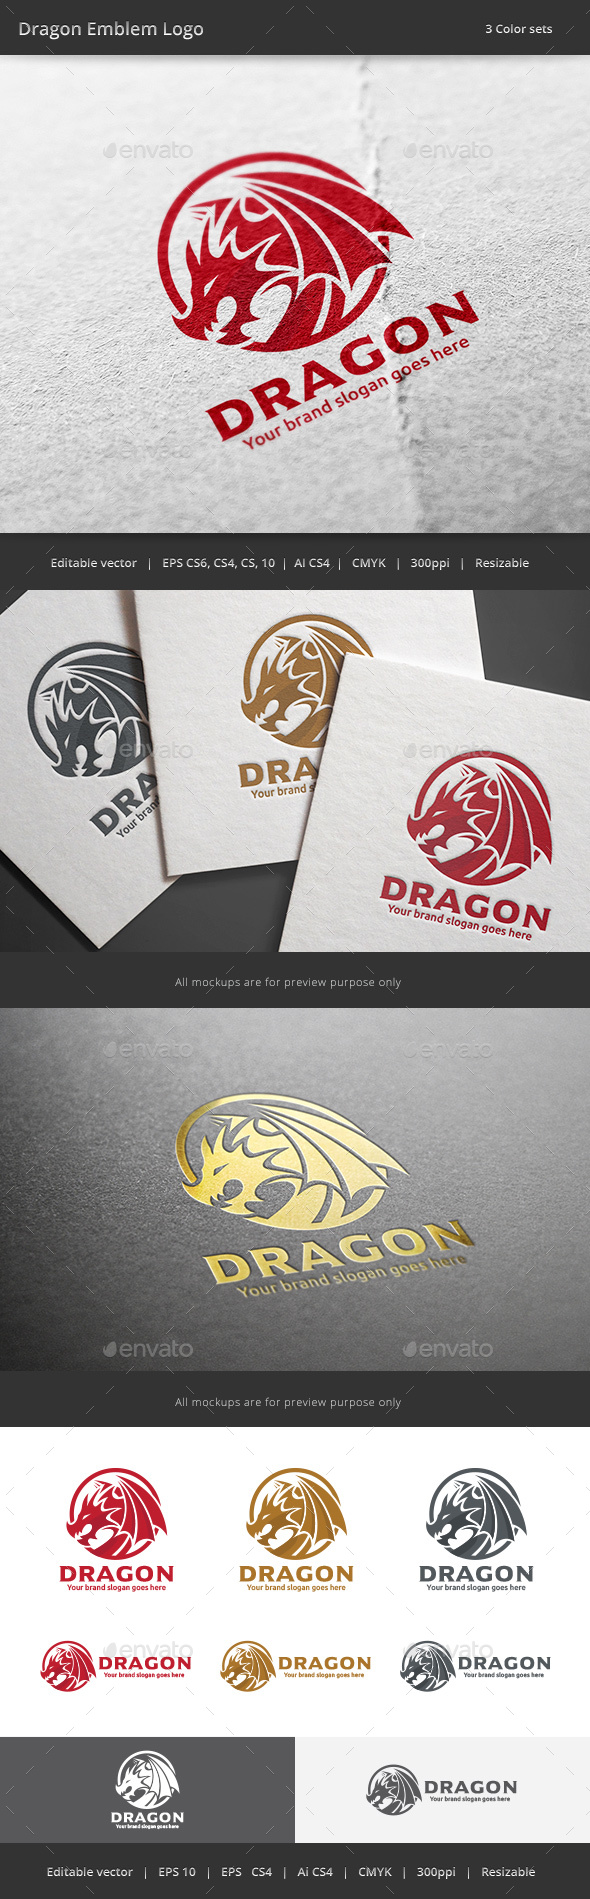 Dragon Emblem Logo